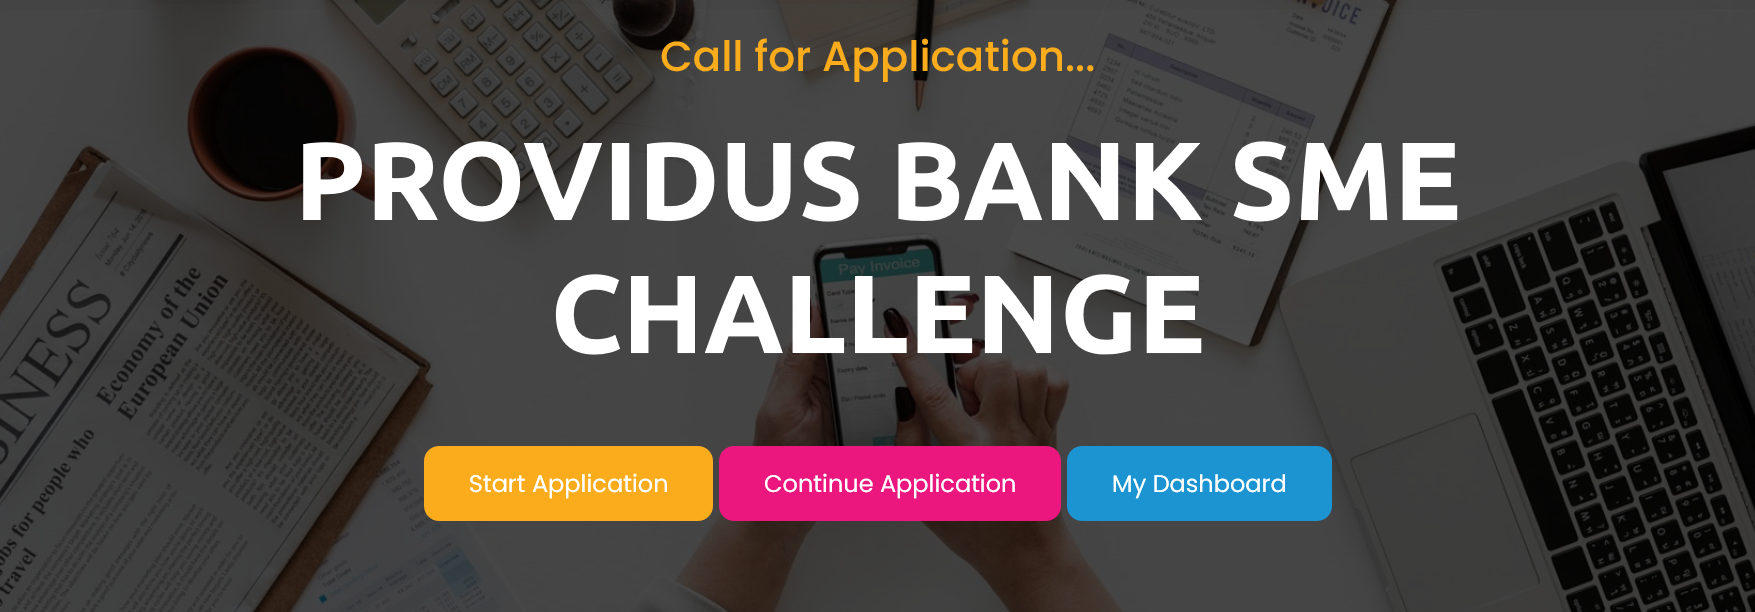 Apply for Providus Bank SME Challenge 2020 Call for Application